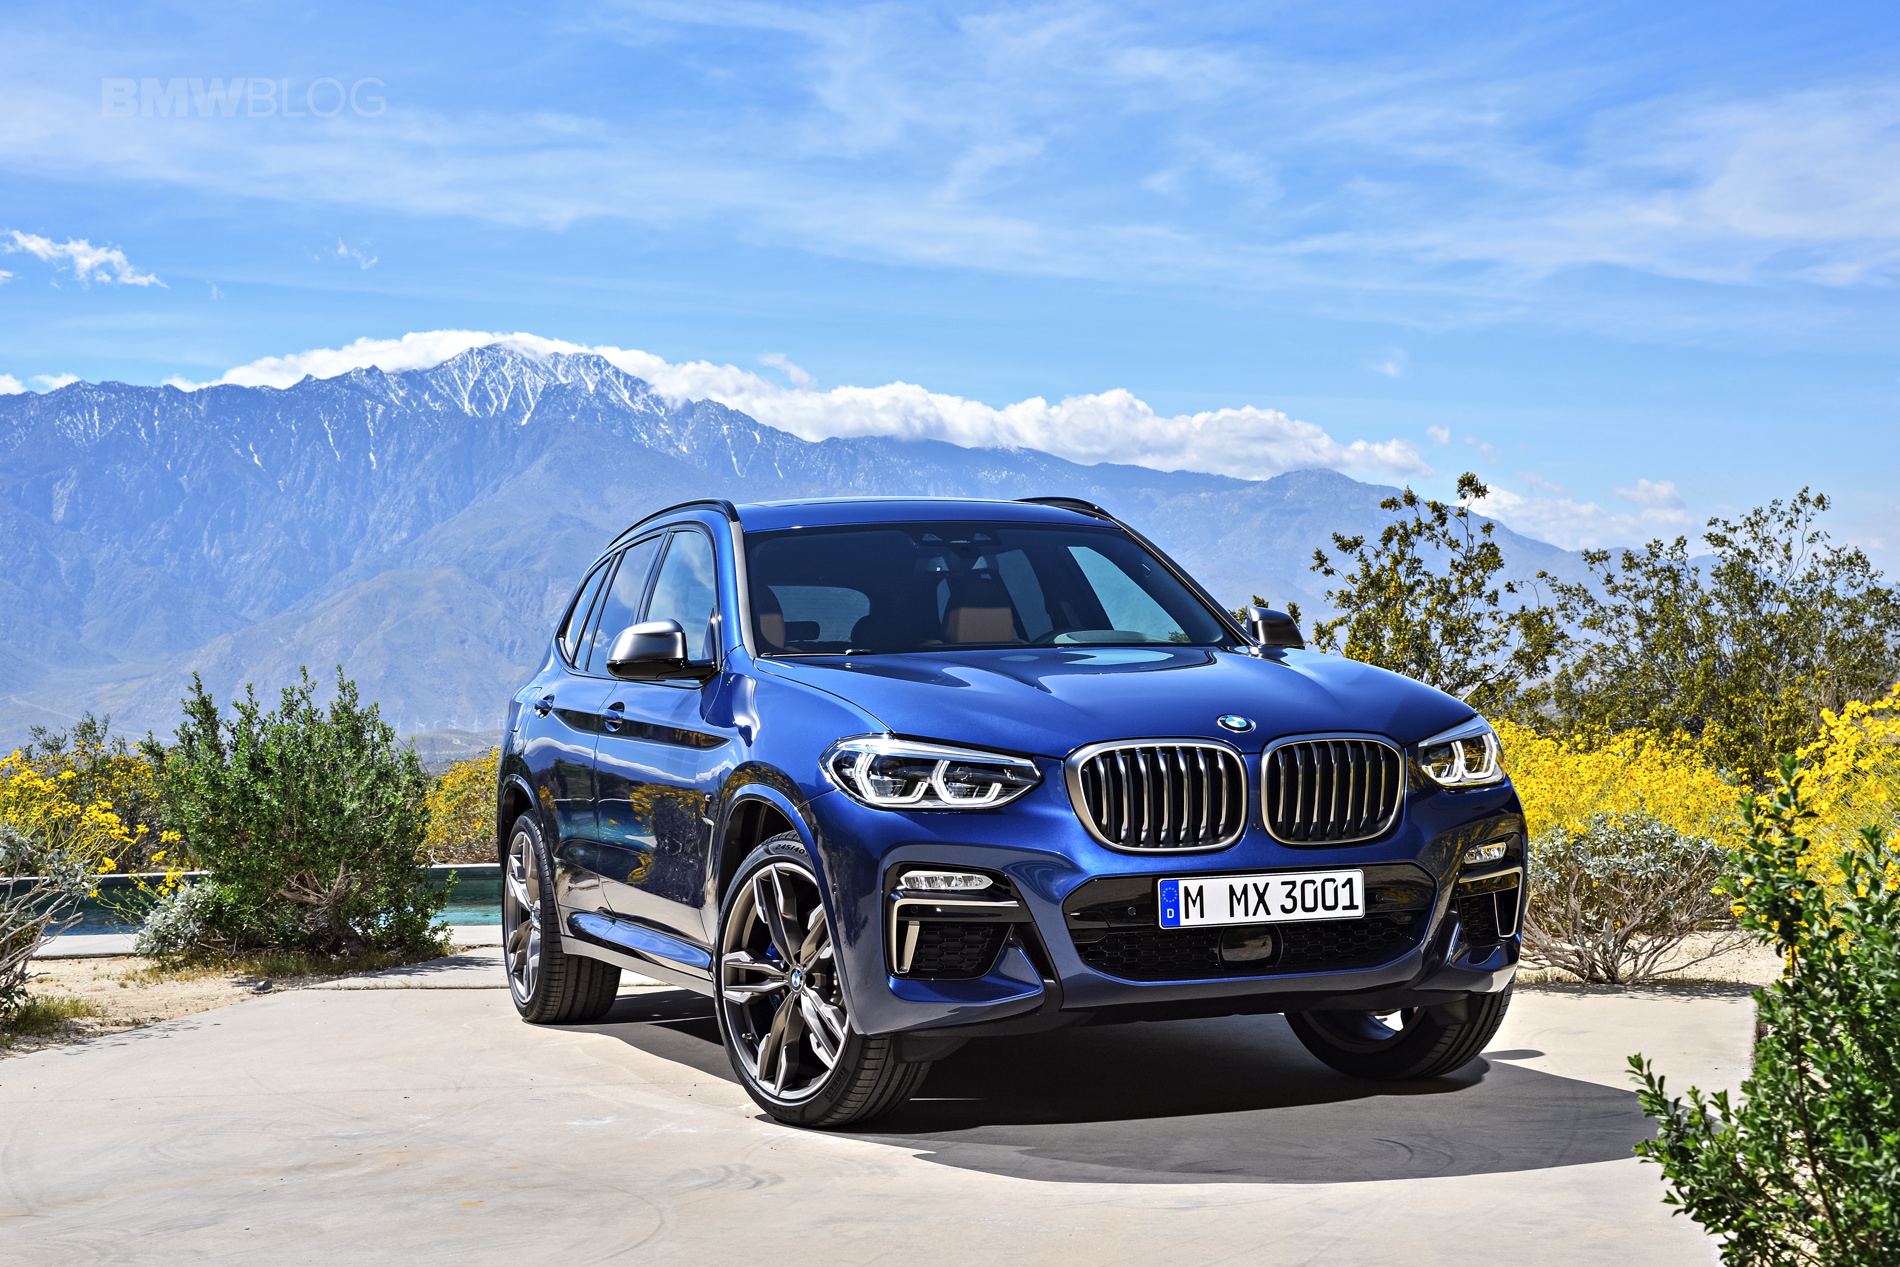 2018-BMW-X3-G01-official-photos-05.jpg